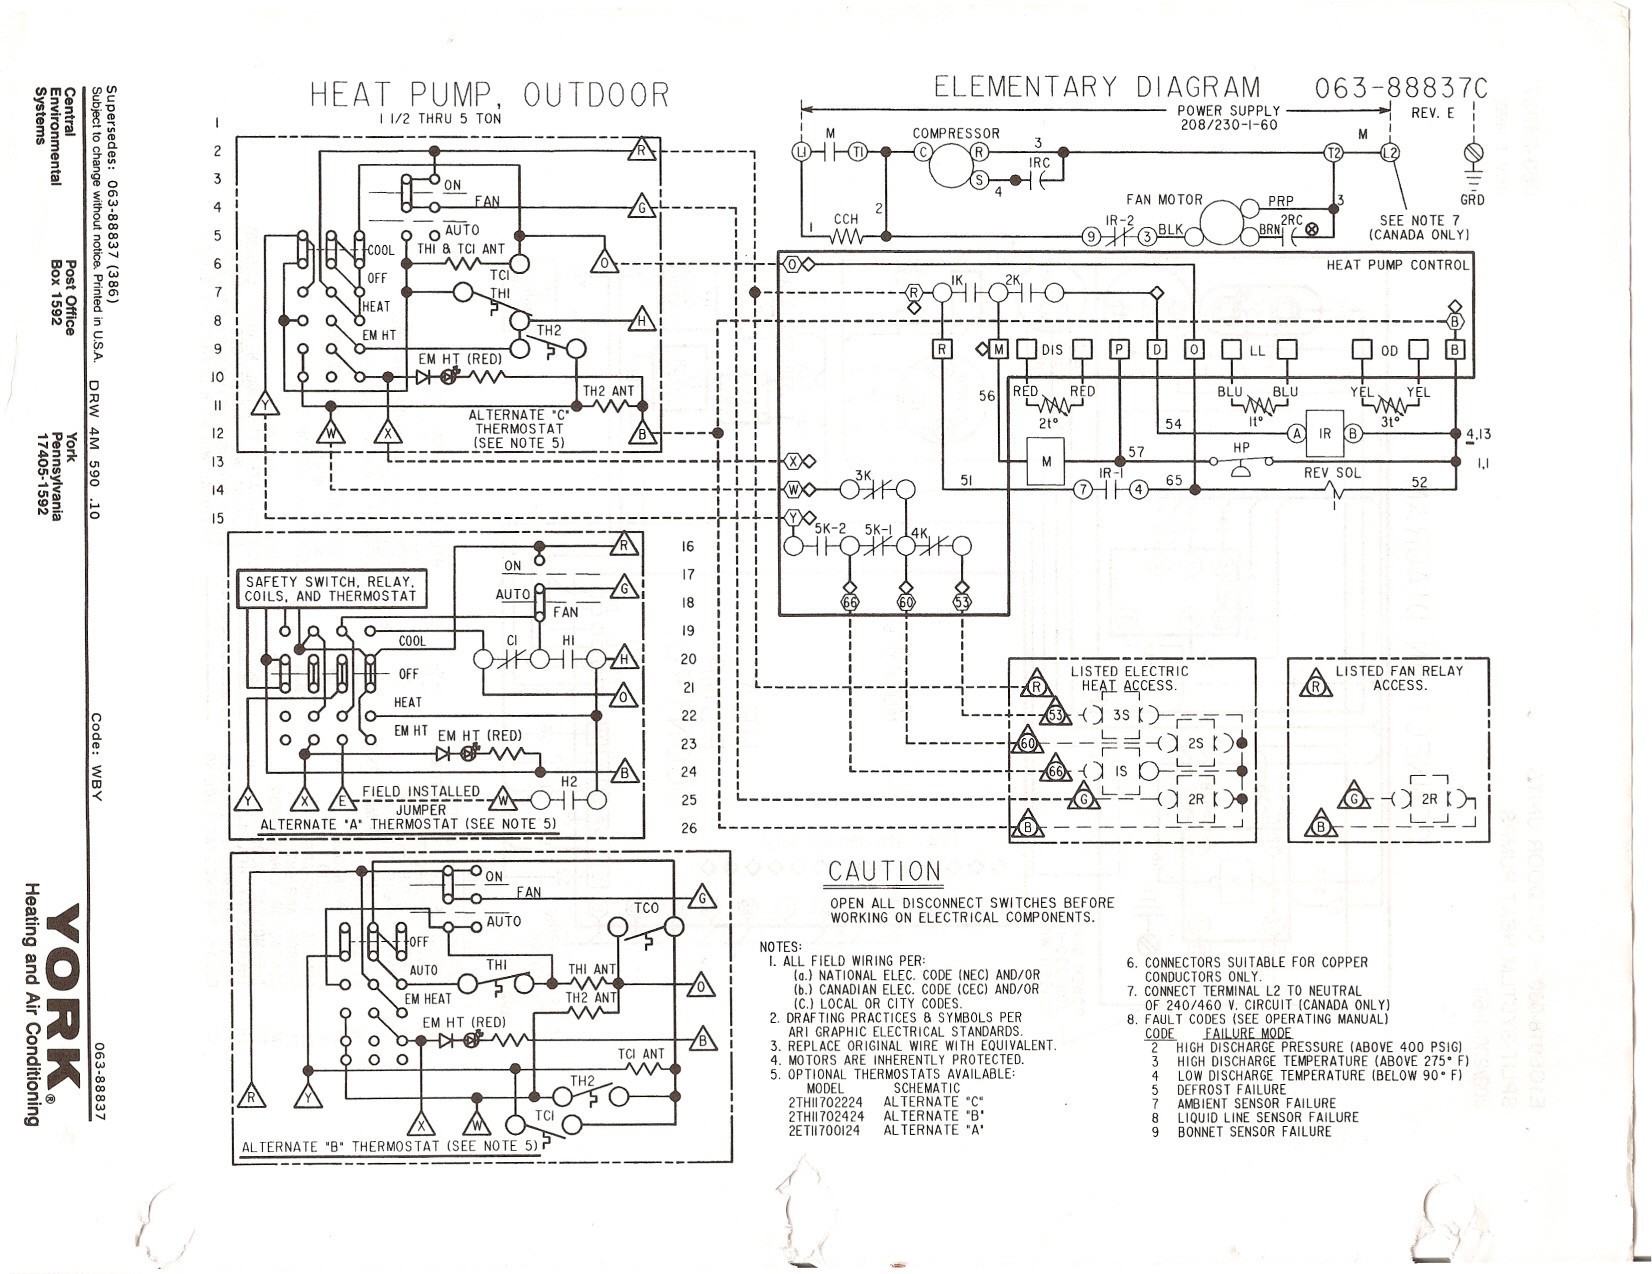 Heat Pump Wiring Diagrams Inspirational Electric Heat Strip Wiring Diagram Diagram